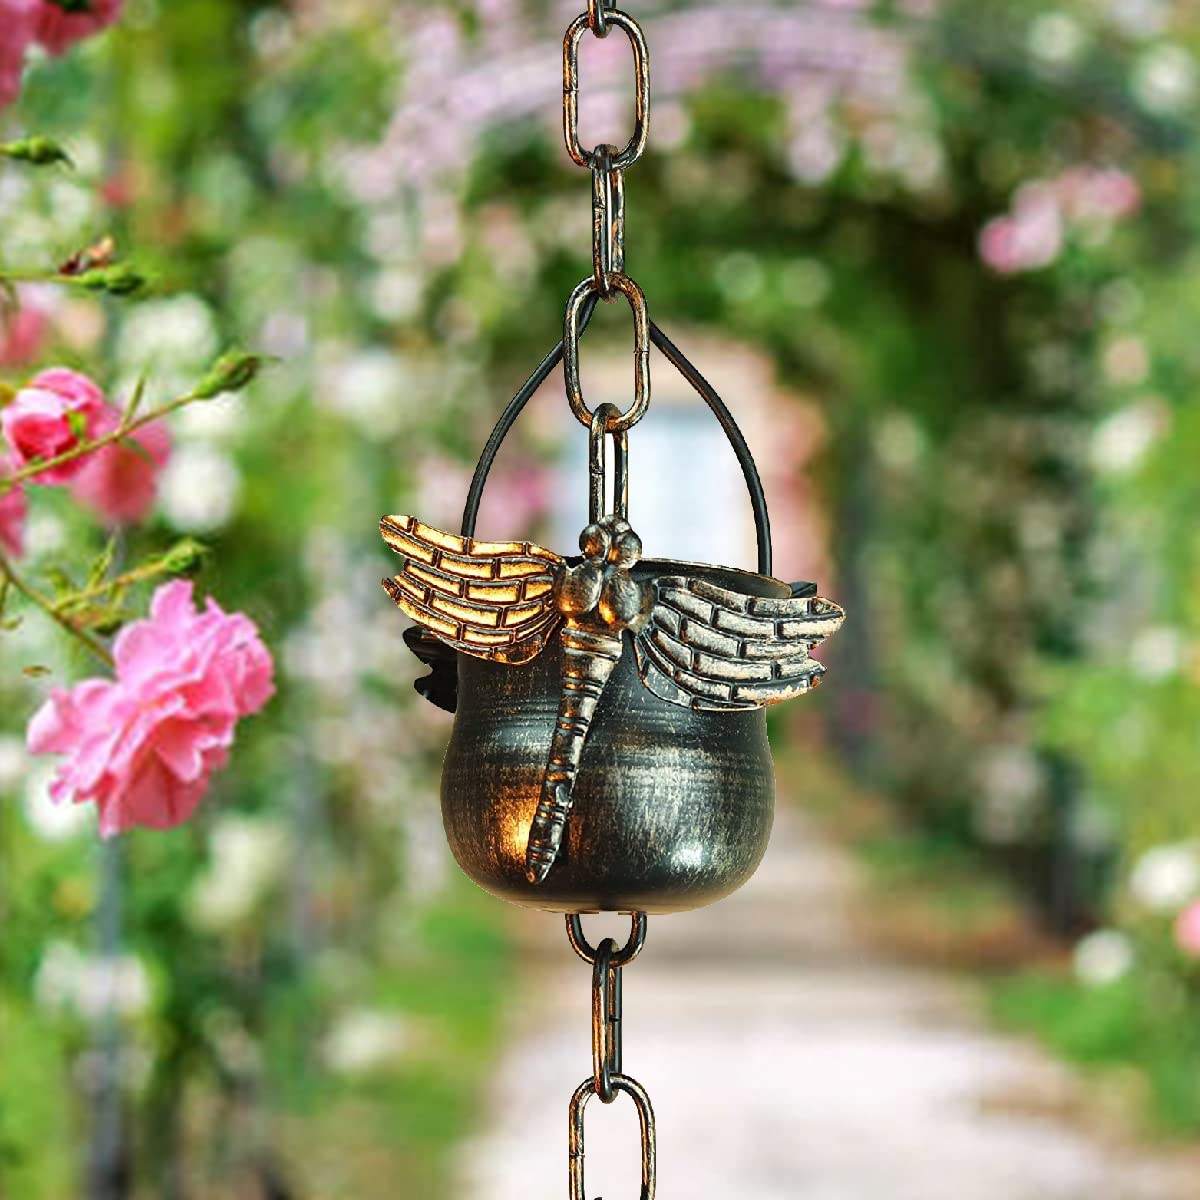 Wholesale Handmade Garden Yard Decor Metal Ladybug Dragonfly Rain Chain Yard Ornaments